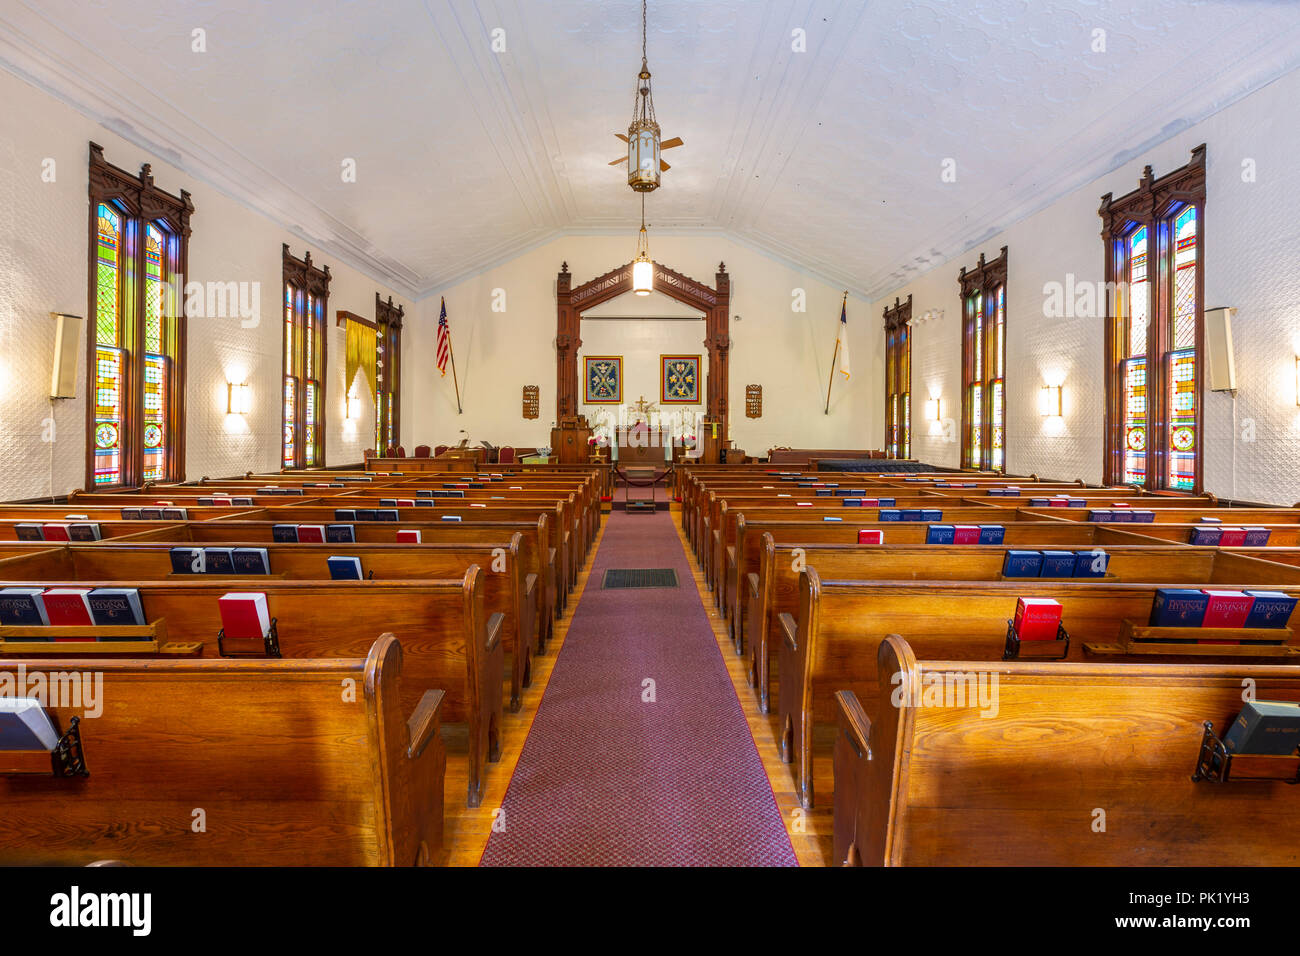 The interior of Trinity United Methodist Church in Oak Bluffs, Massachusetts on Martha's Vineyard. Stock Photo